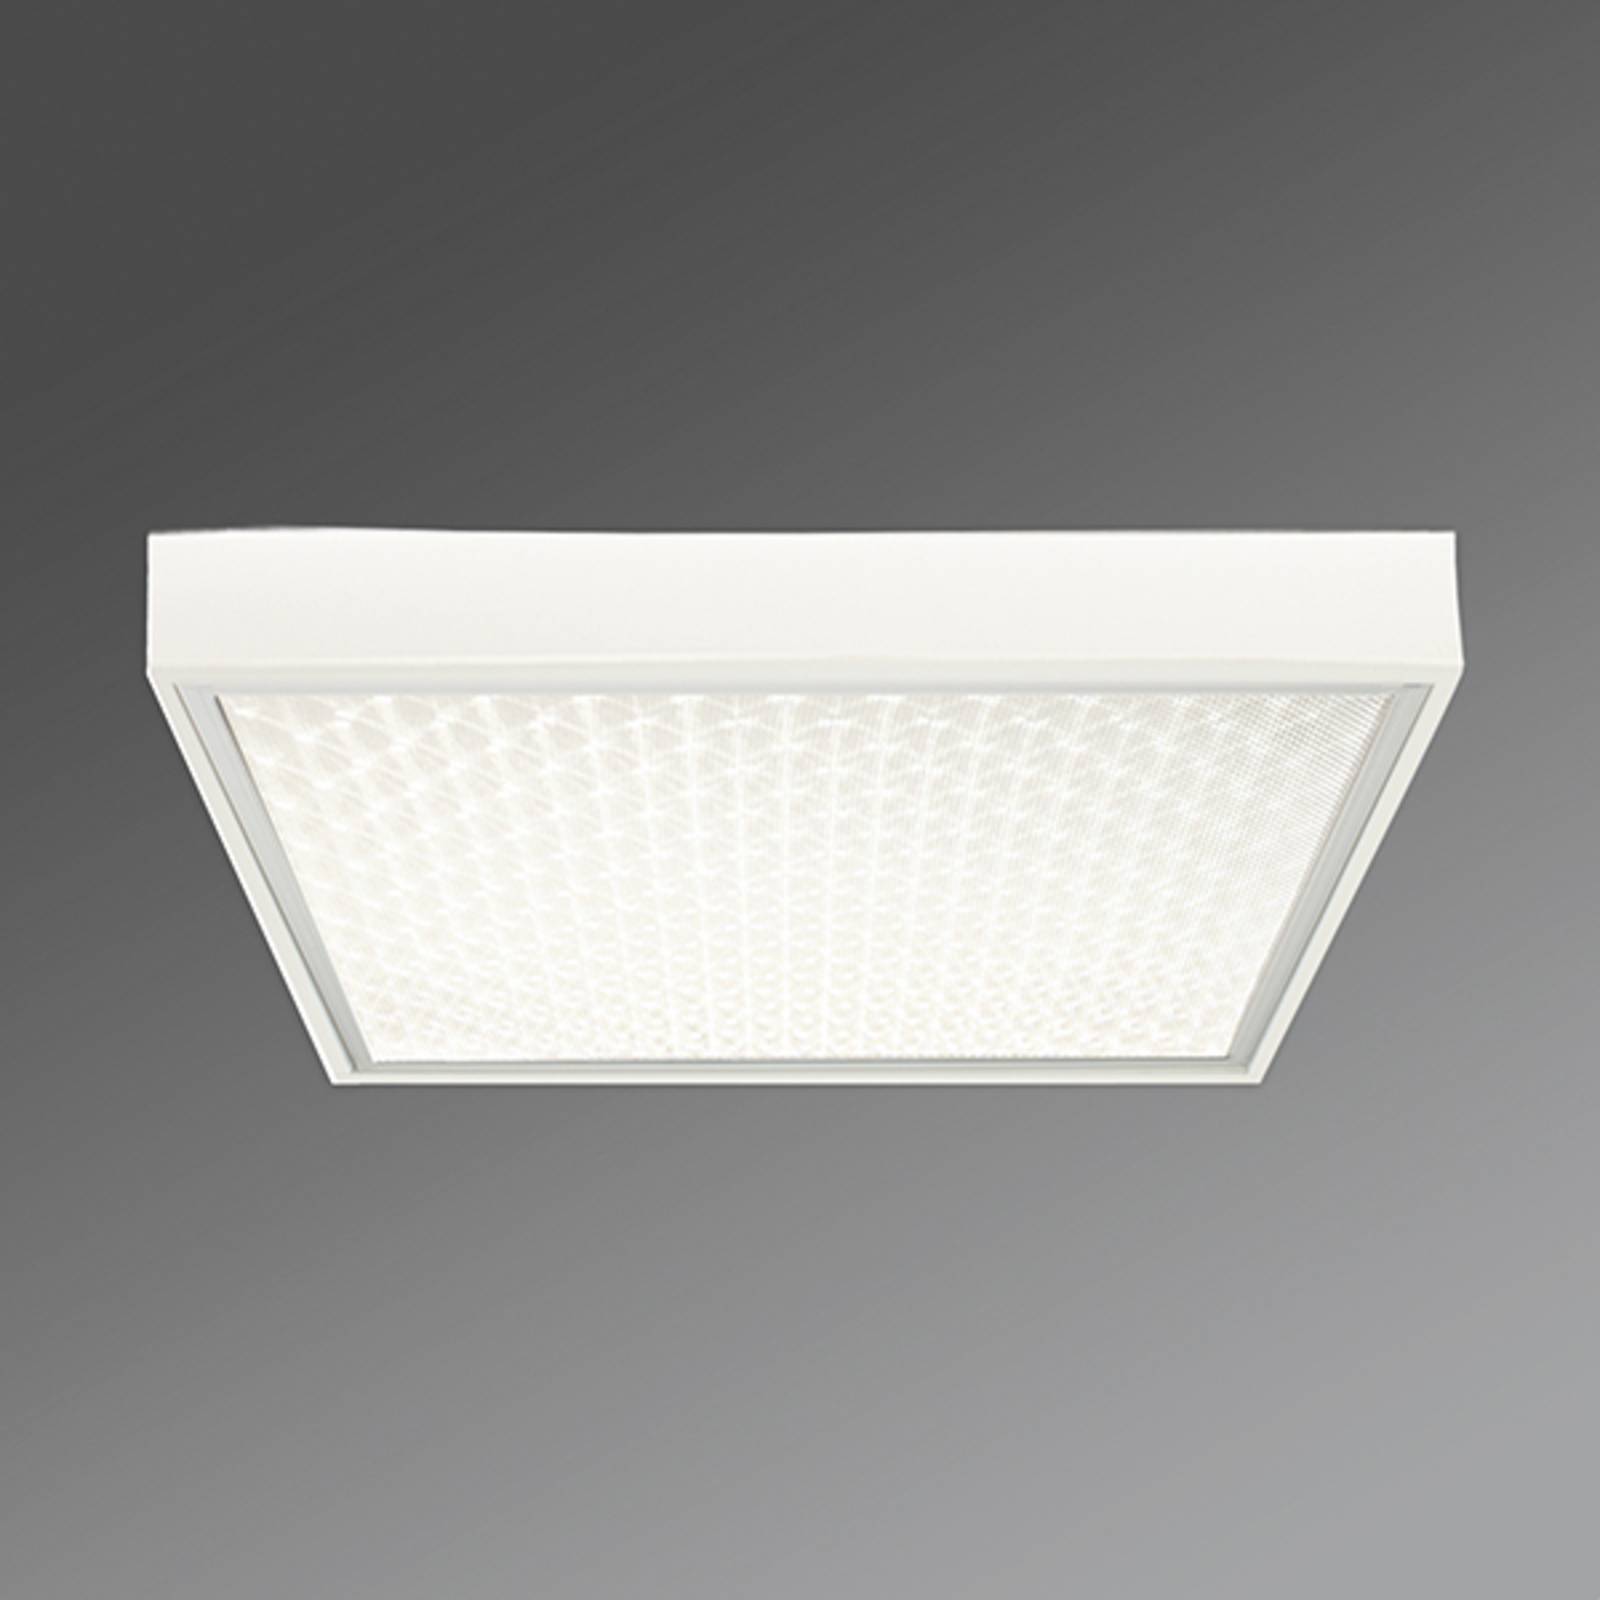 Biurowa lampa sufitowa Protection-PRAMP 660 BAP